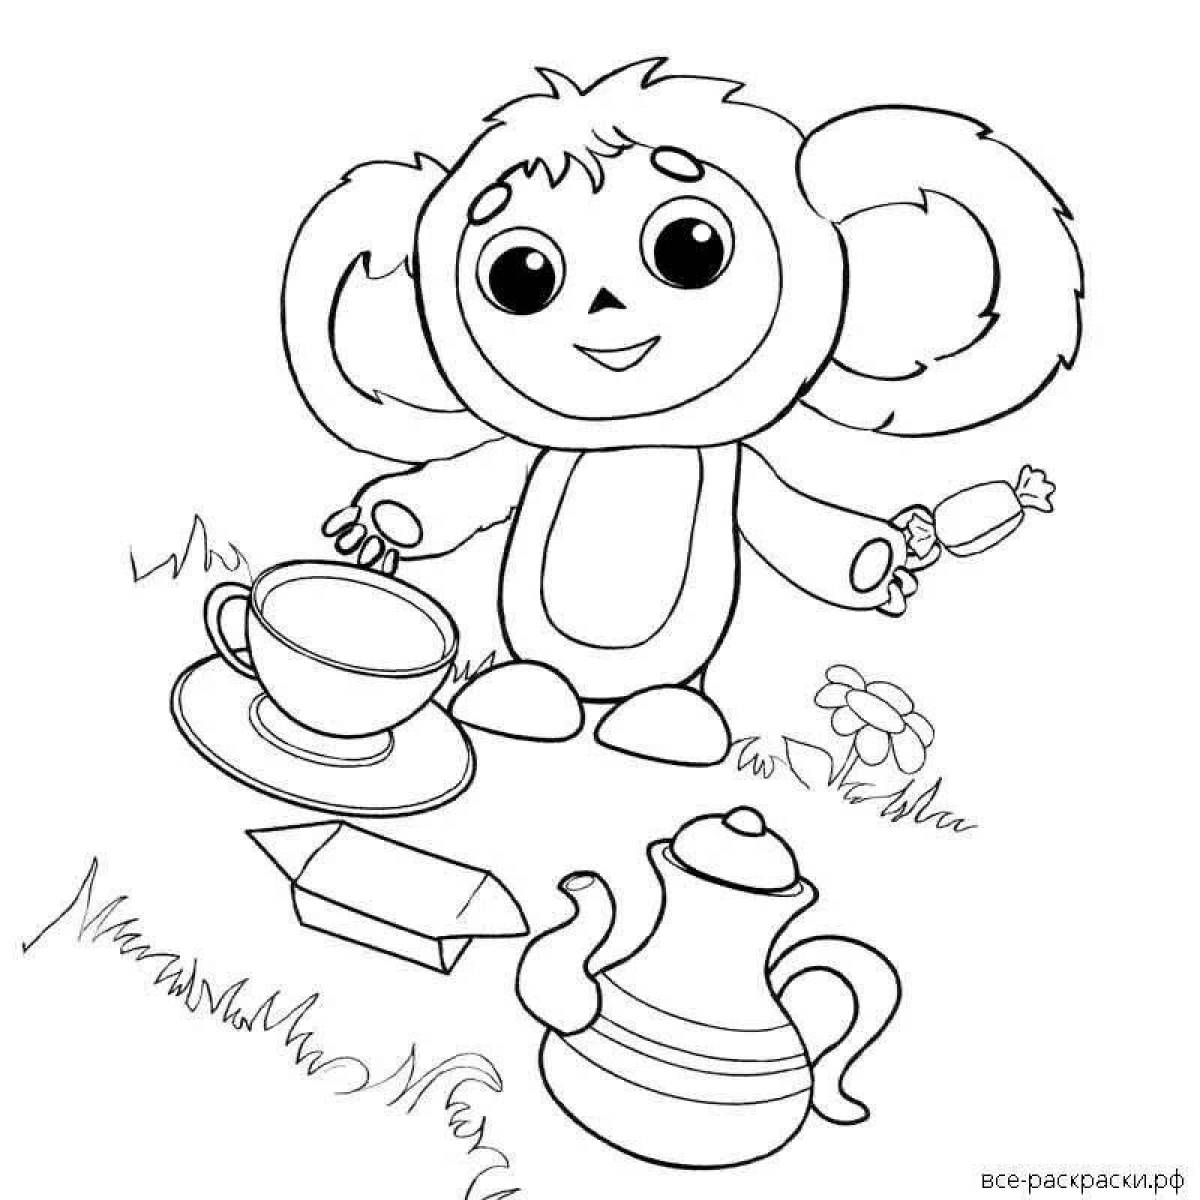 Live drawing of cheburashka